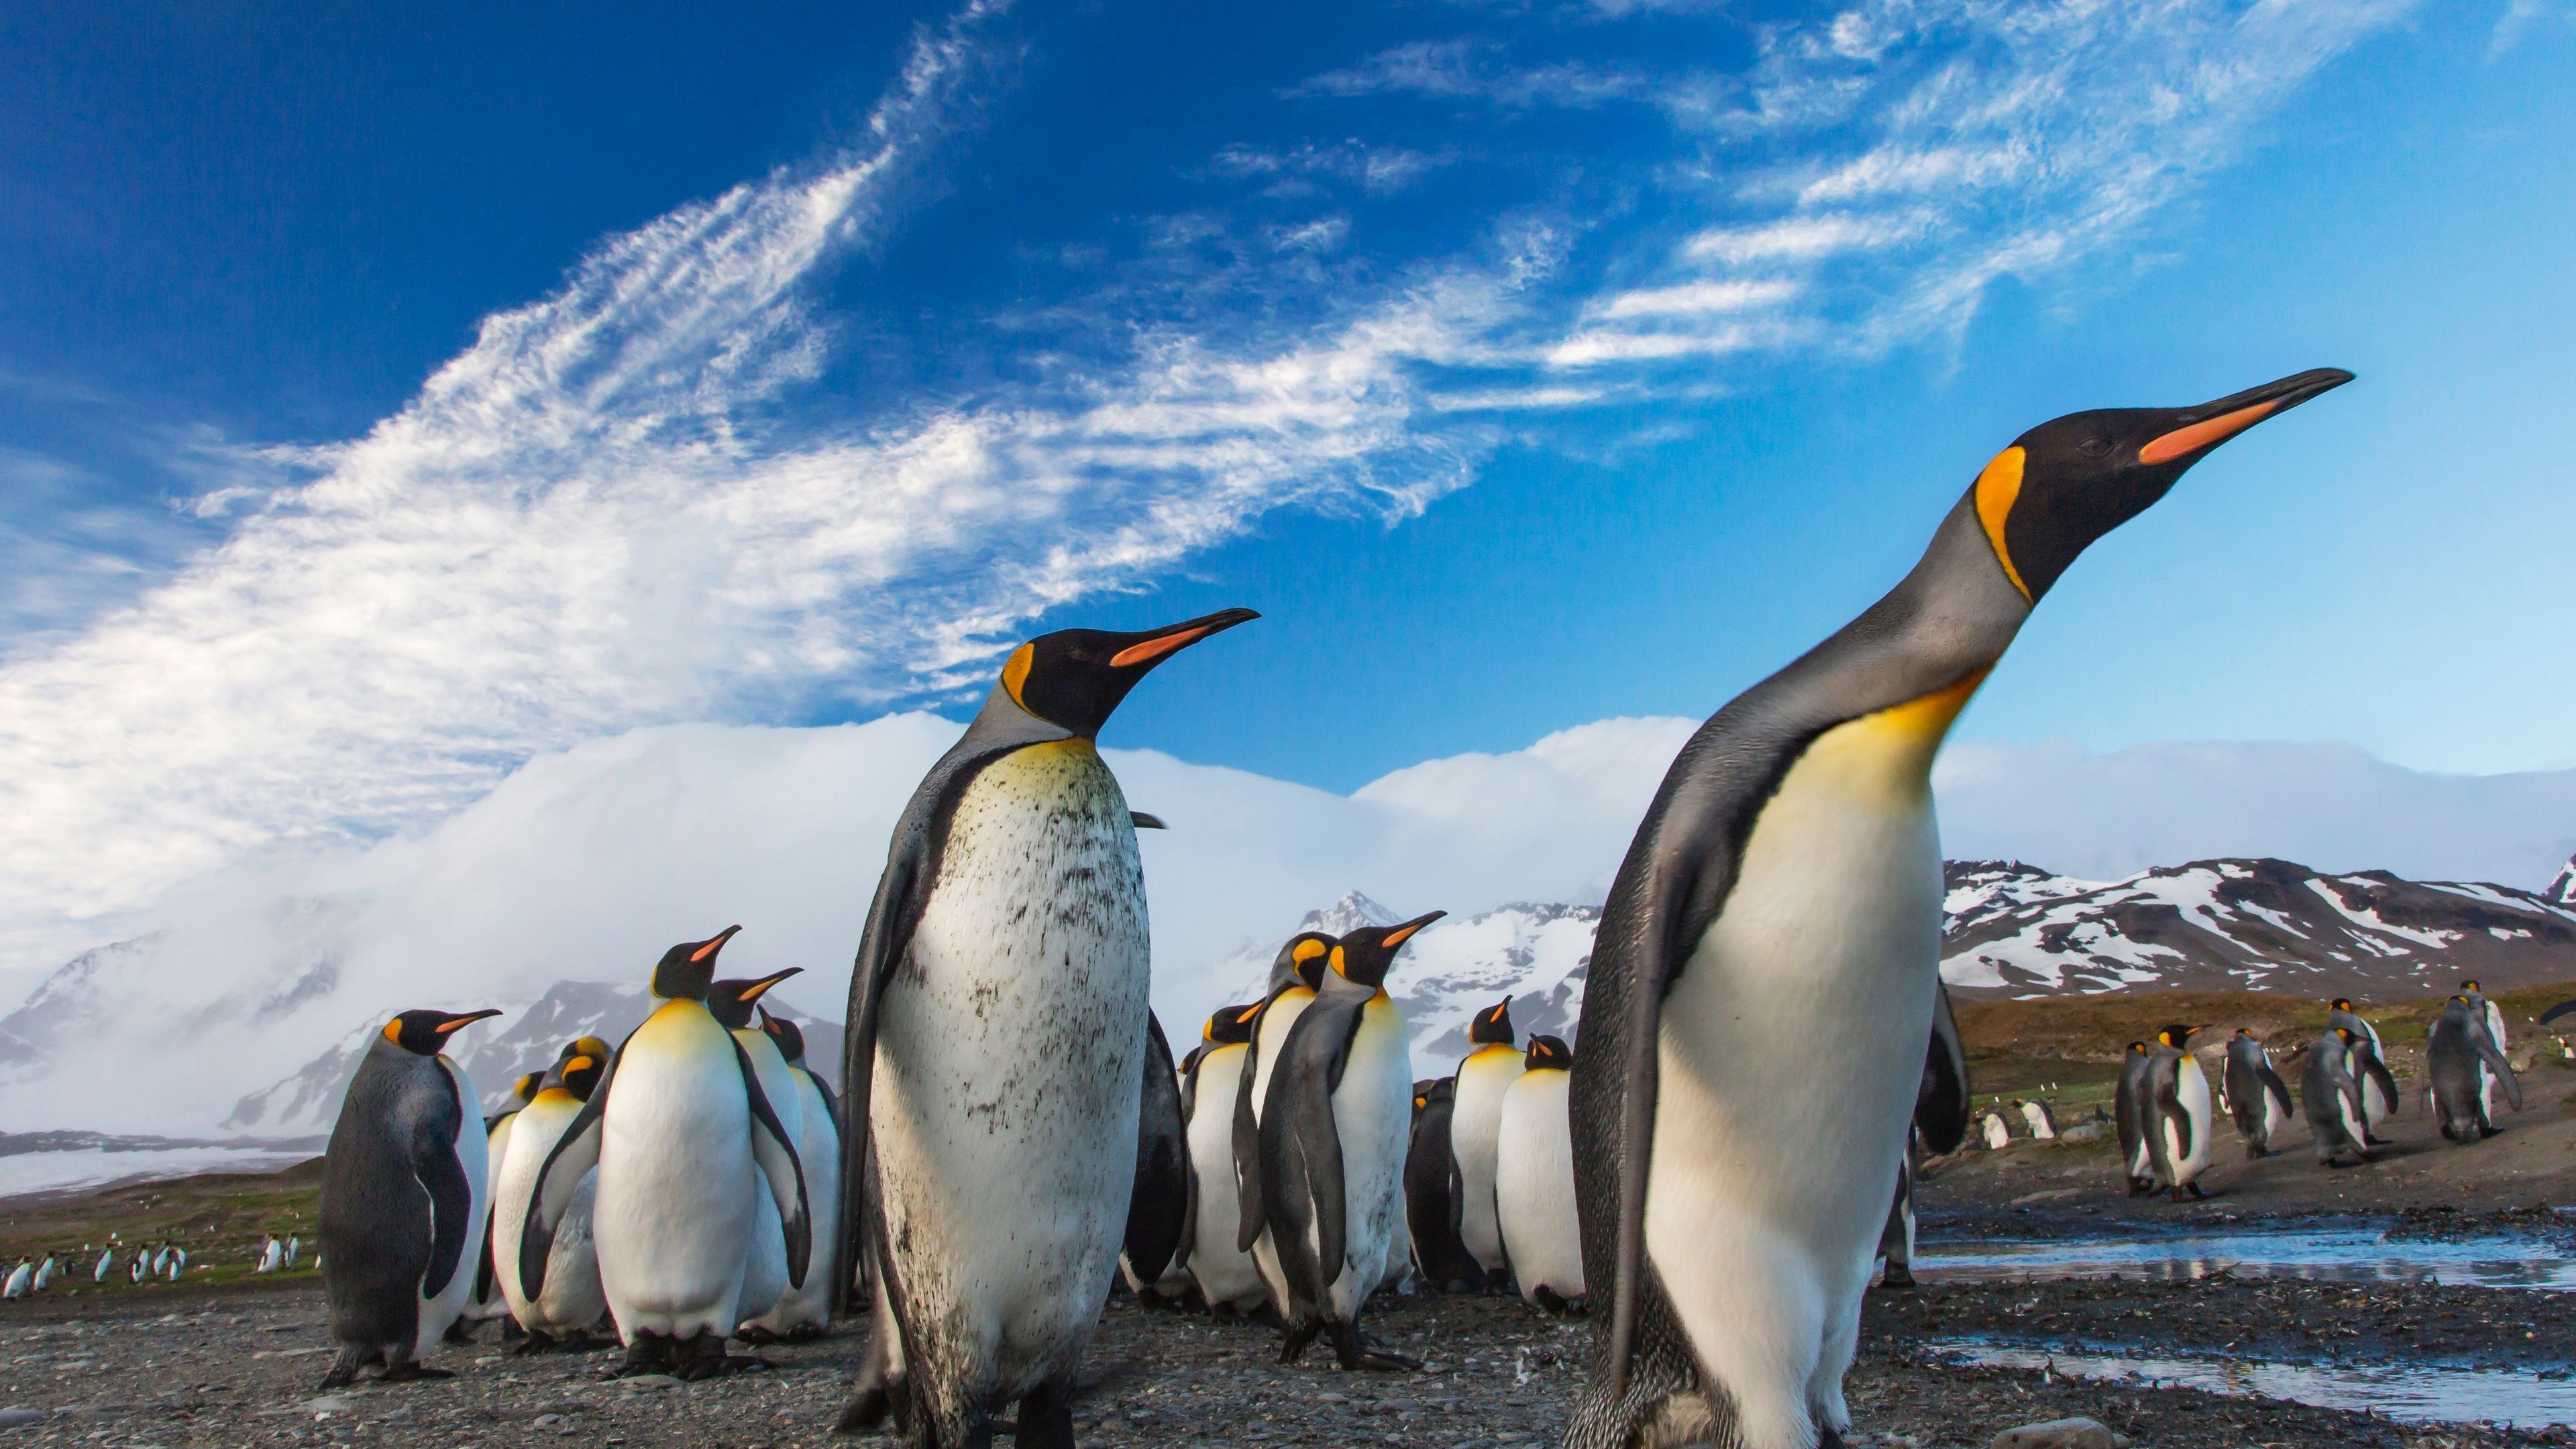 HD penguin wallpaper, Striking visuals, Desktop delight, Captivating scene, 3840x2160 4K Desktop